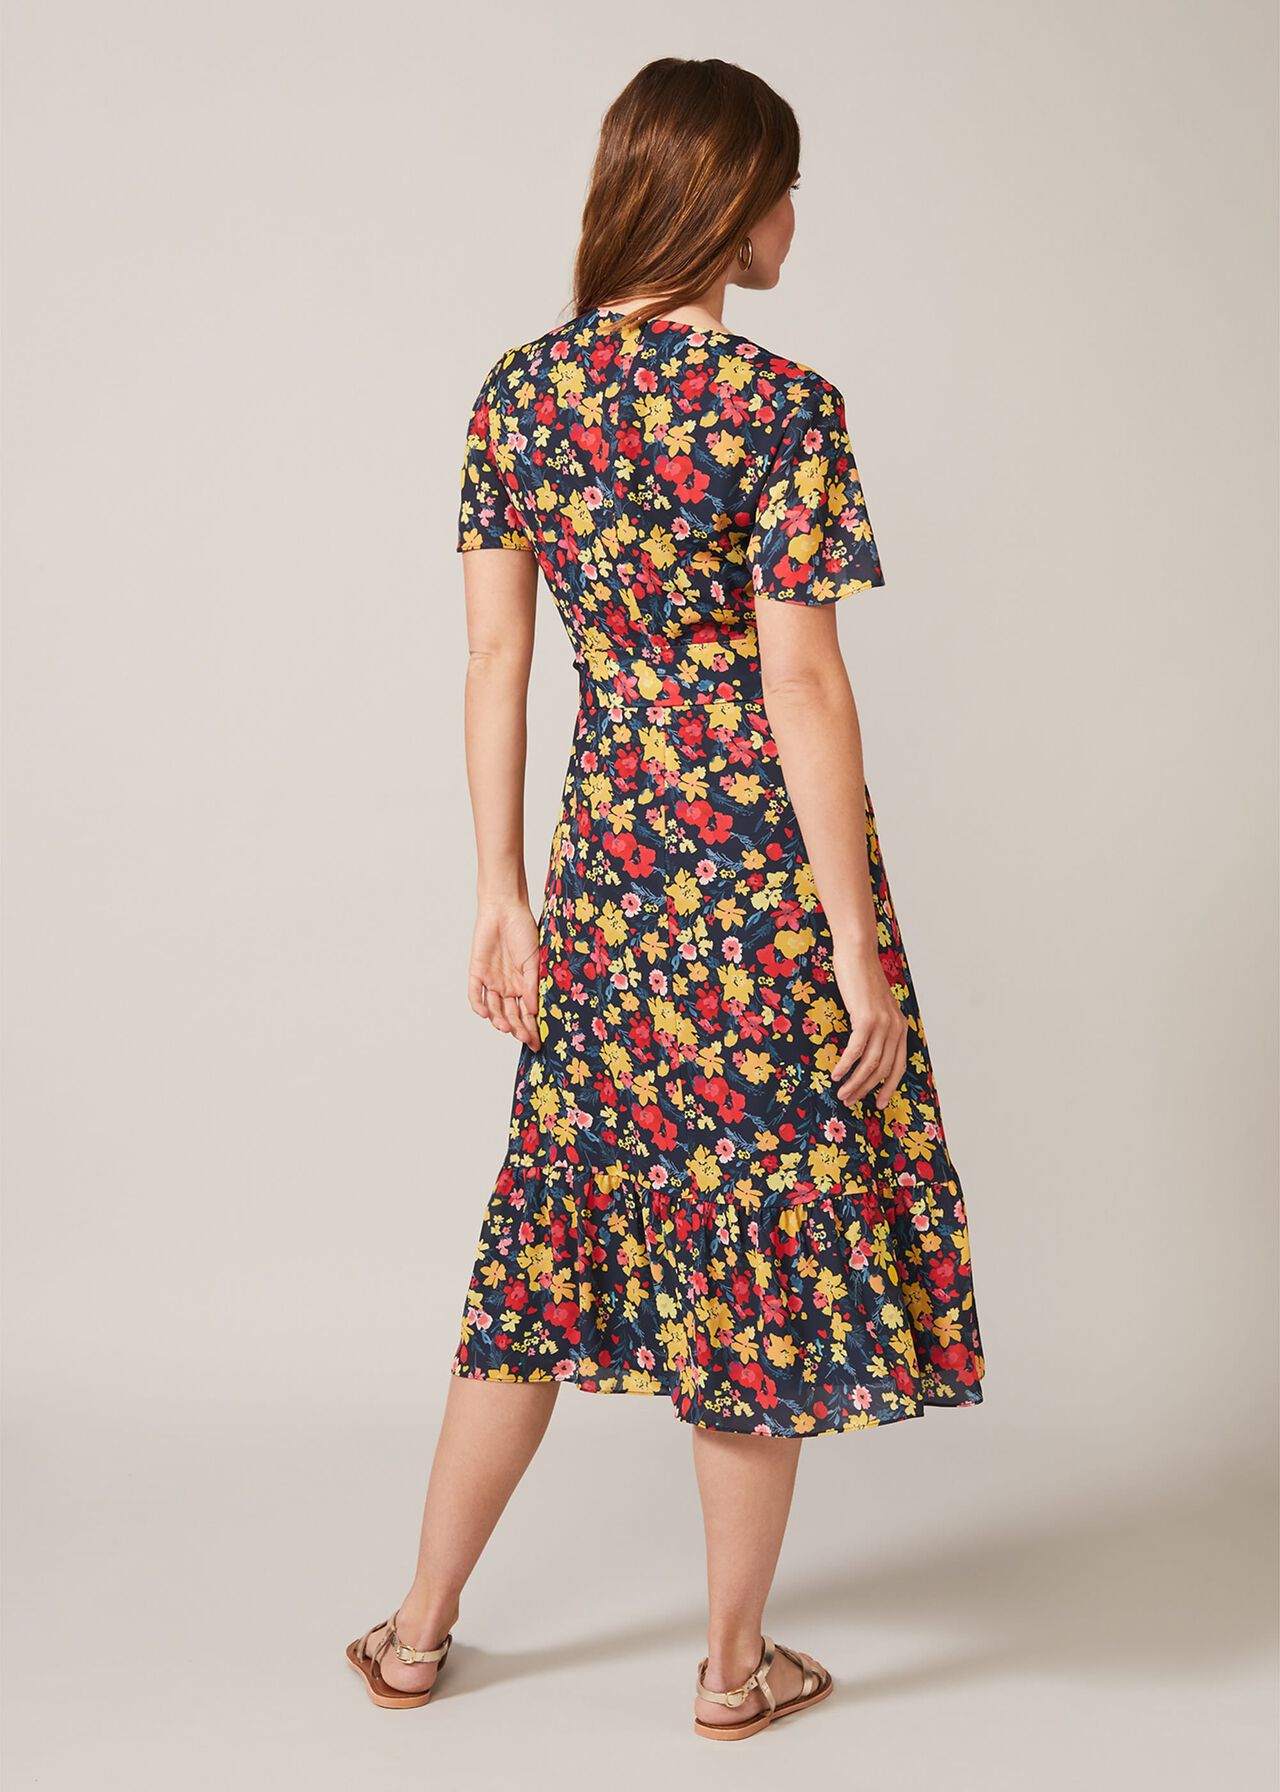 Ailee Floral Printed Dress